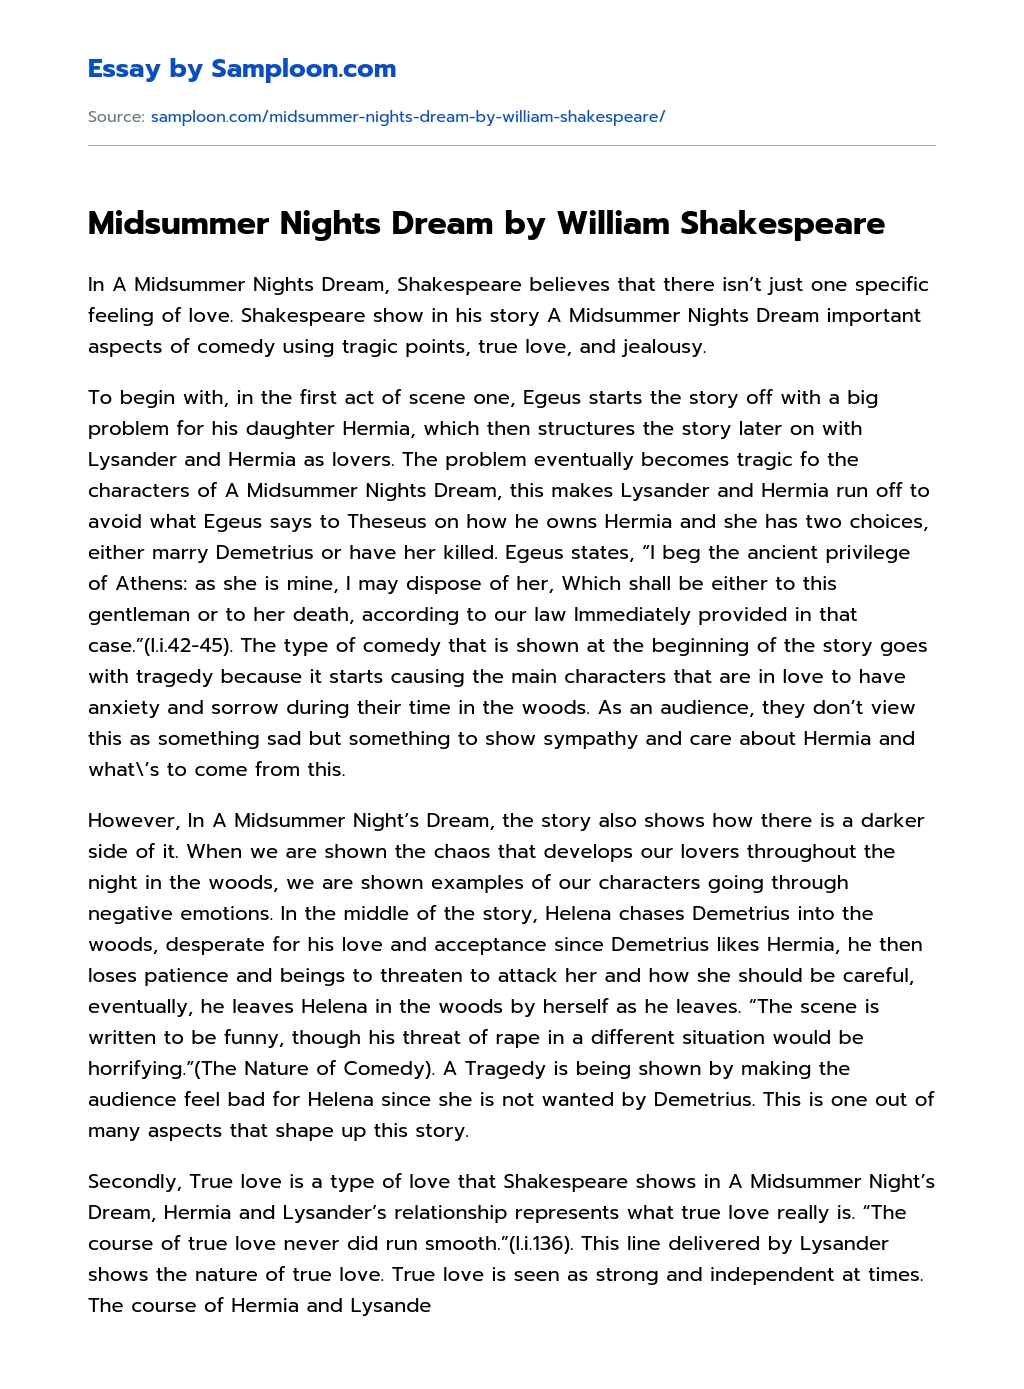 Midsummer Nights Dream by William Shakespeare essay